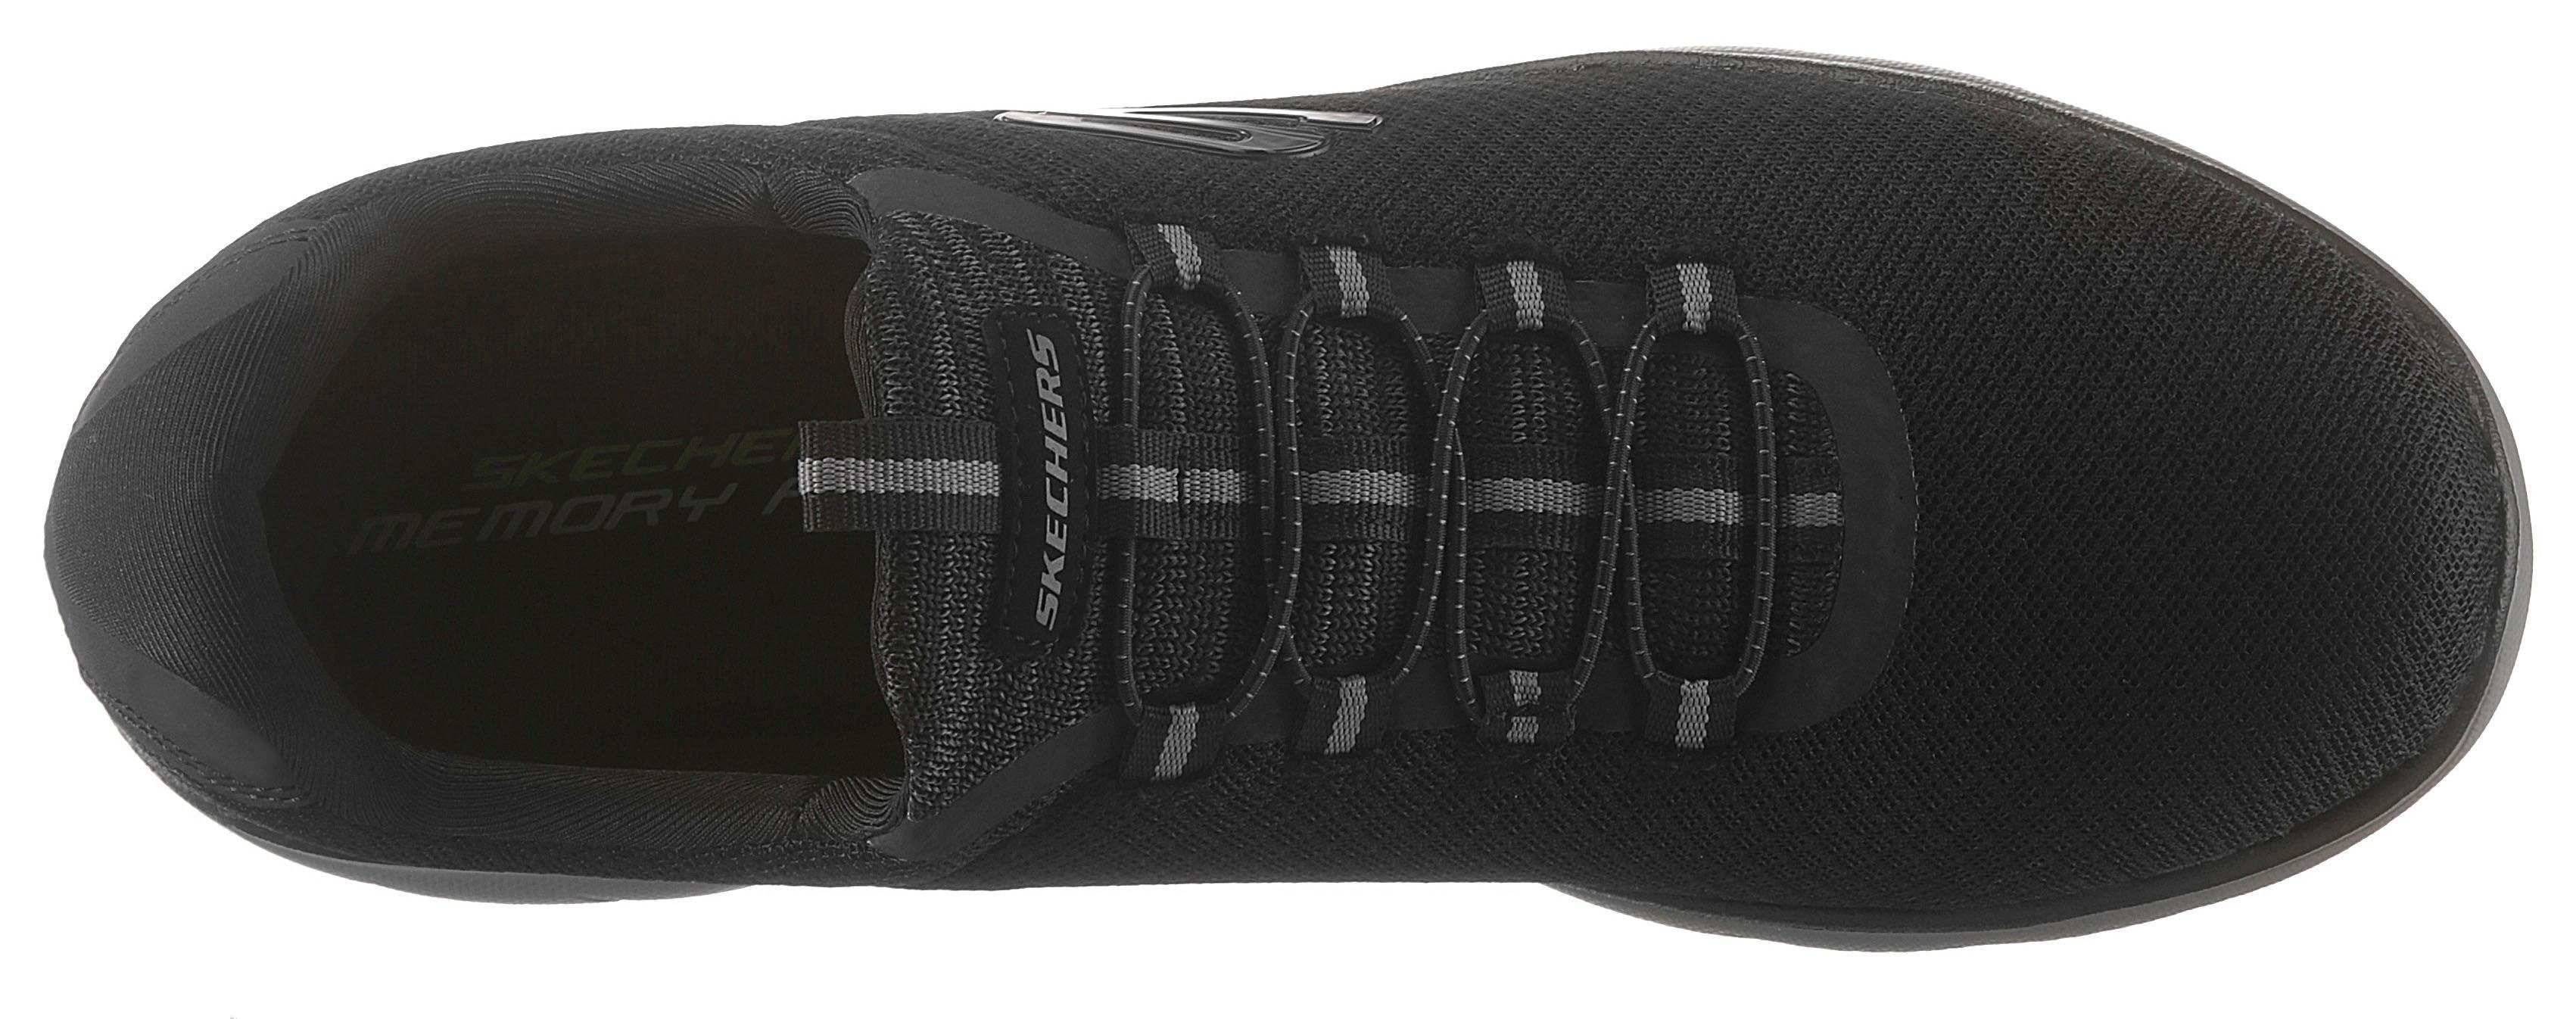 Sneaker mit Slip-On komfortabler black/charcoal Memory Foam-Ausstattung Summits Skechers